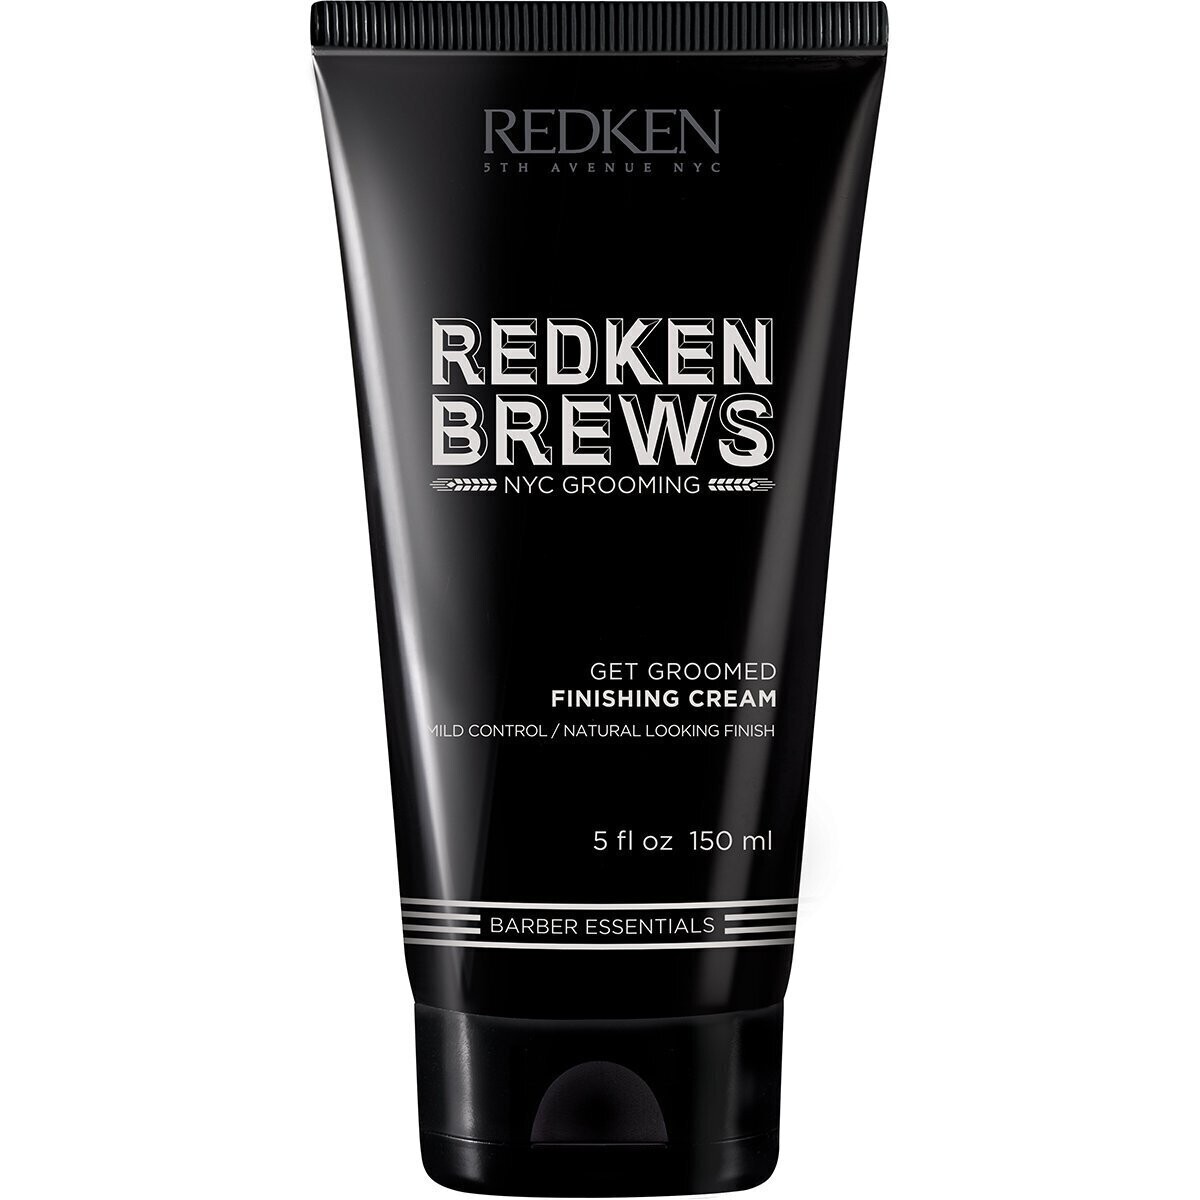 Redken Brews Get Groomed Finishing Cream